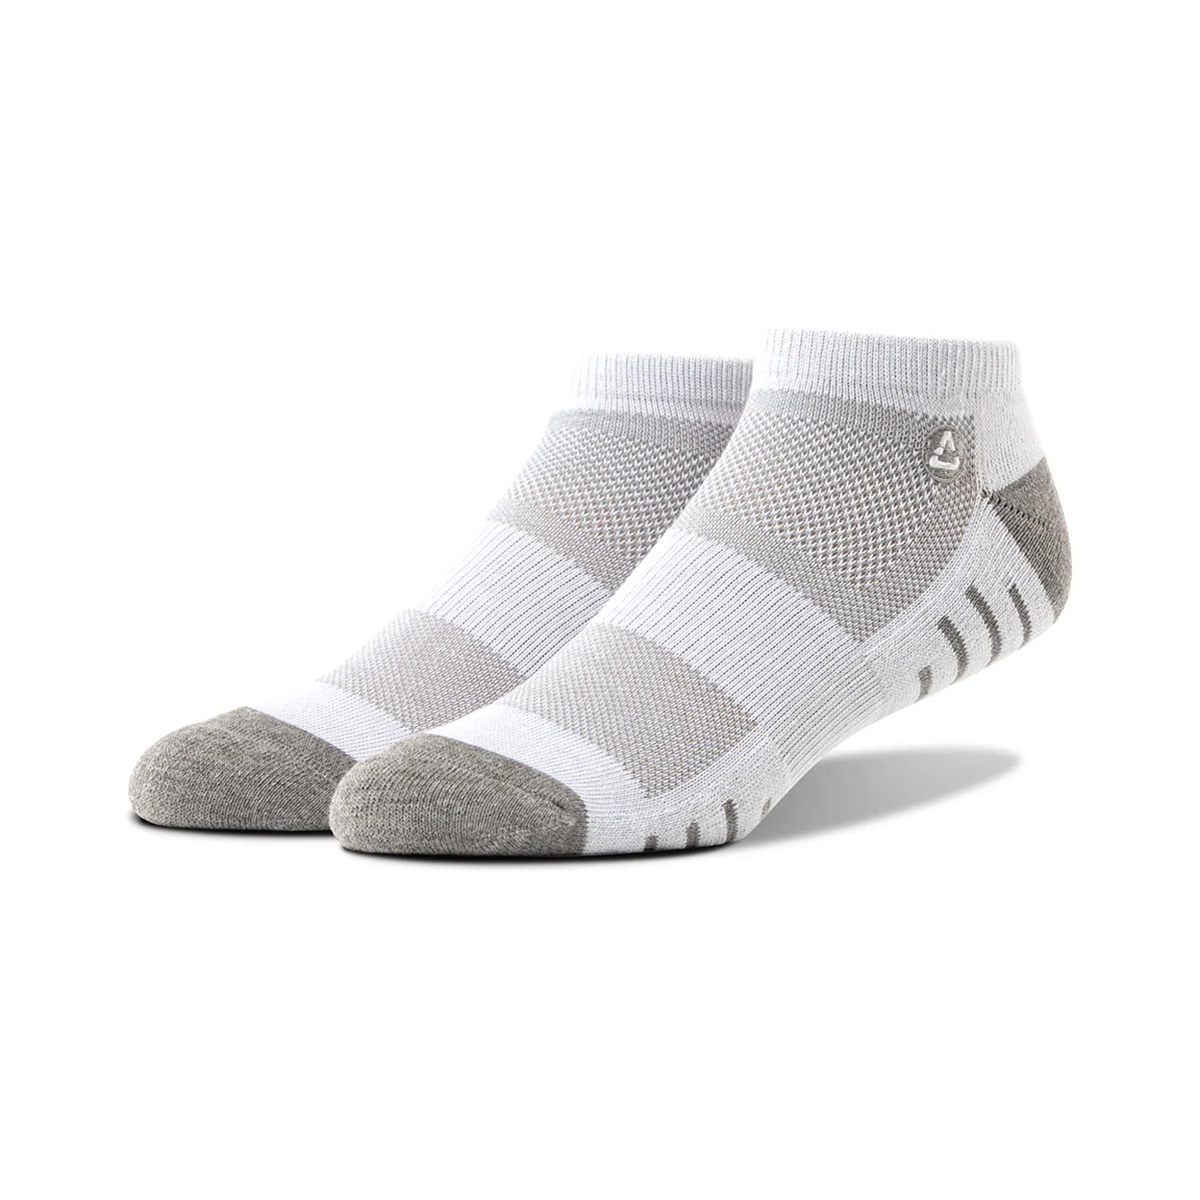 cuater-golf-eighteener-ankle-socks-4mr236-microchip